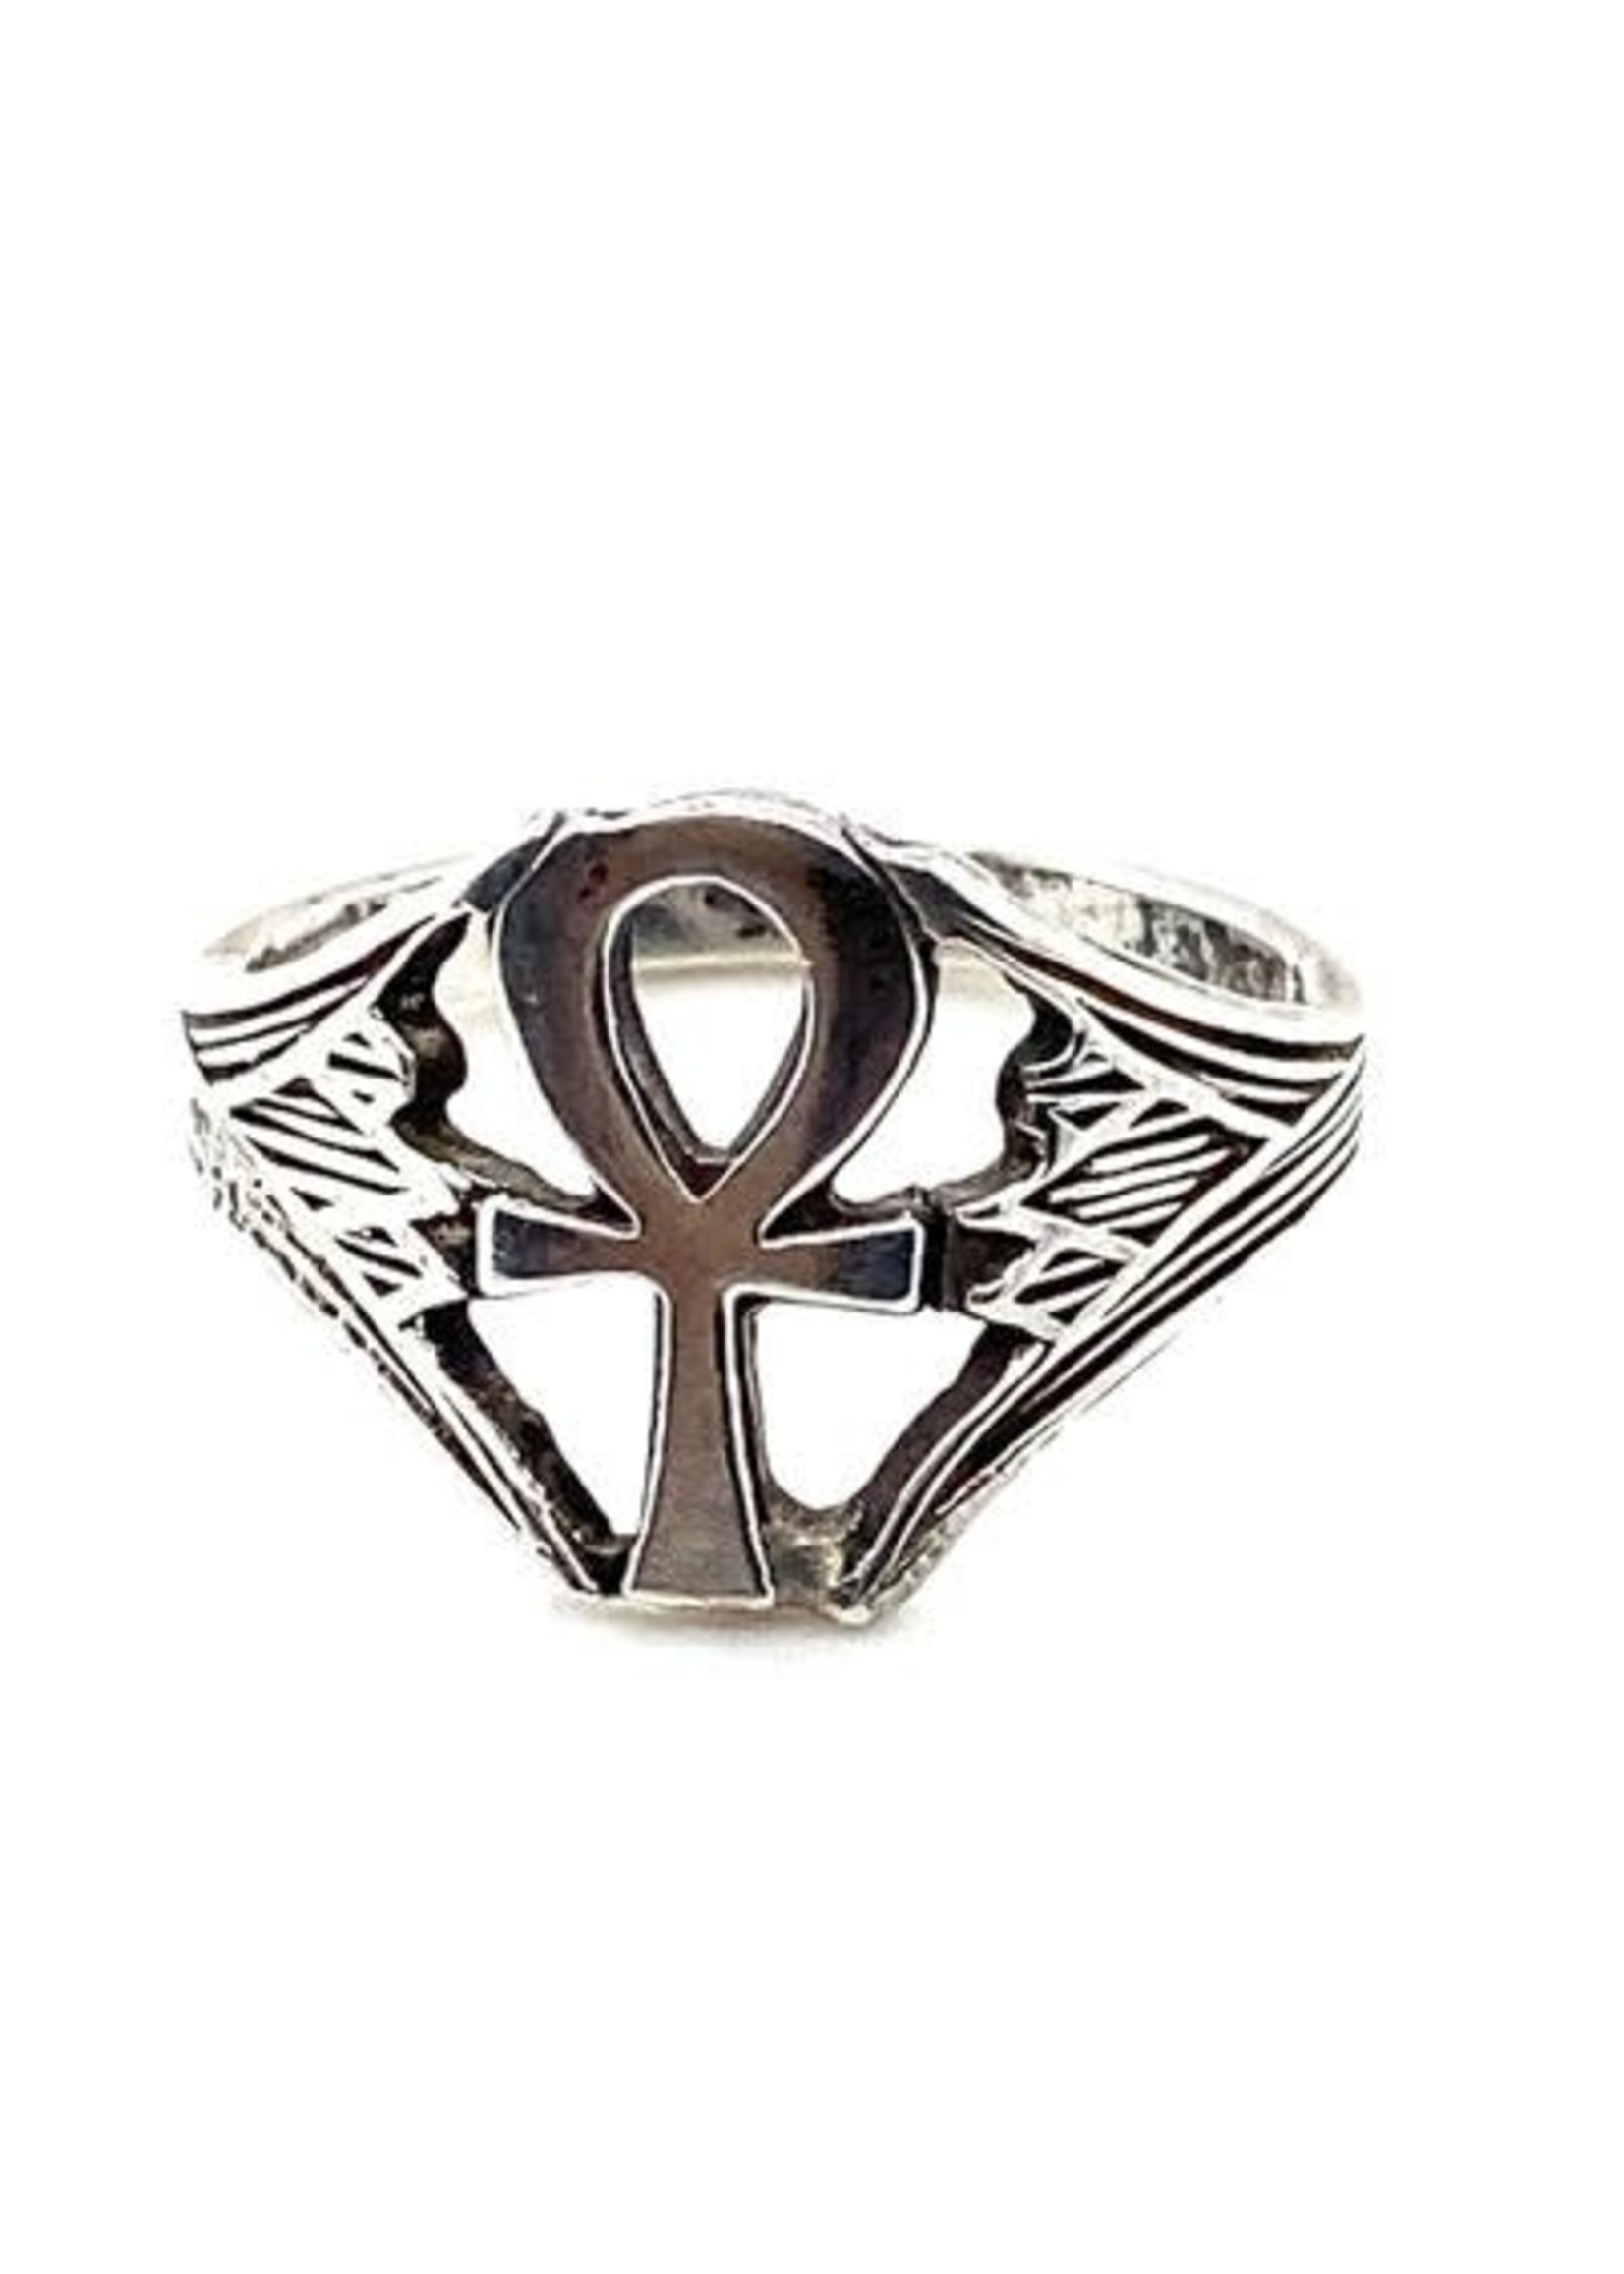 Vintage & Occasion Occasion zilveren ring met Ankh kruis